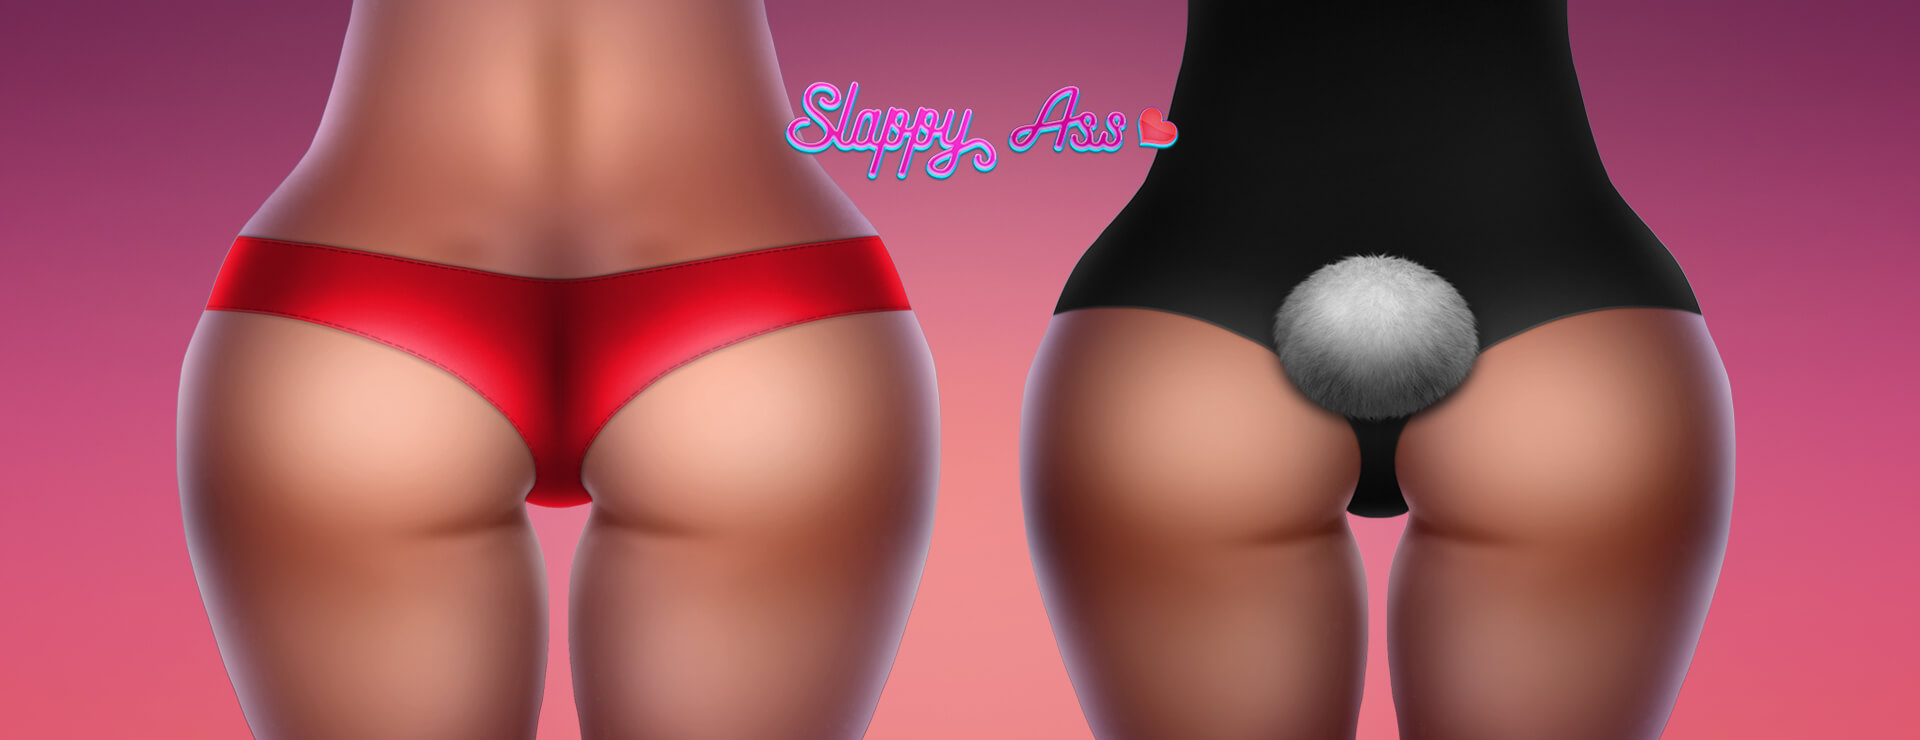 Slappy Ass - シミュレーション ゲーム